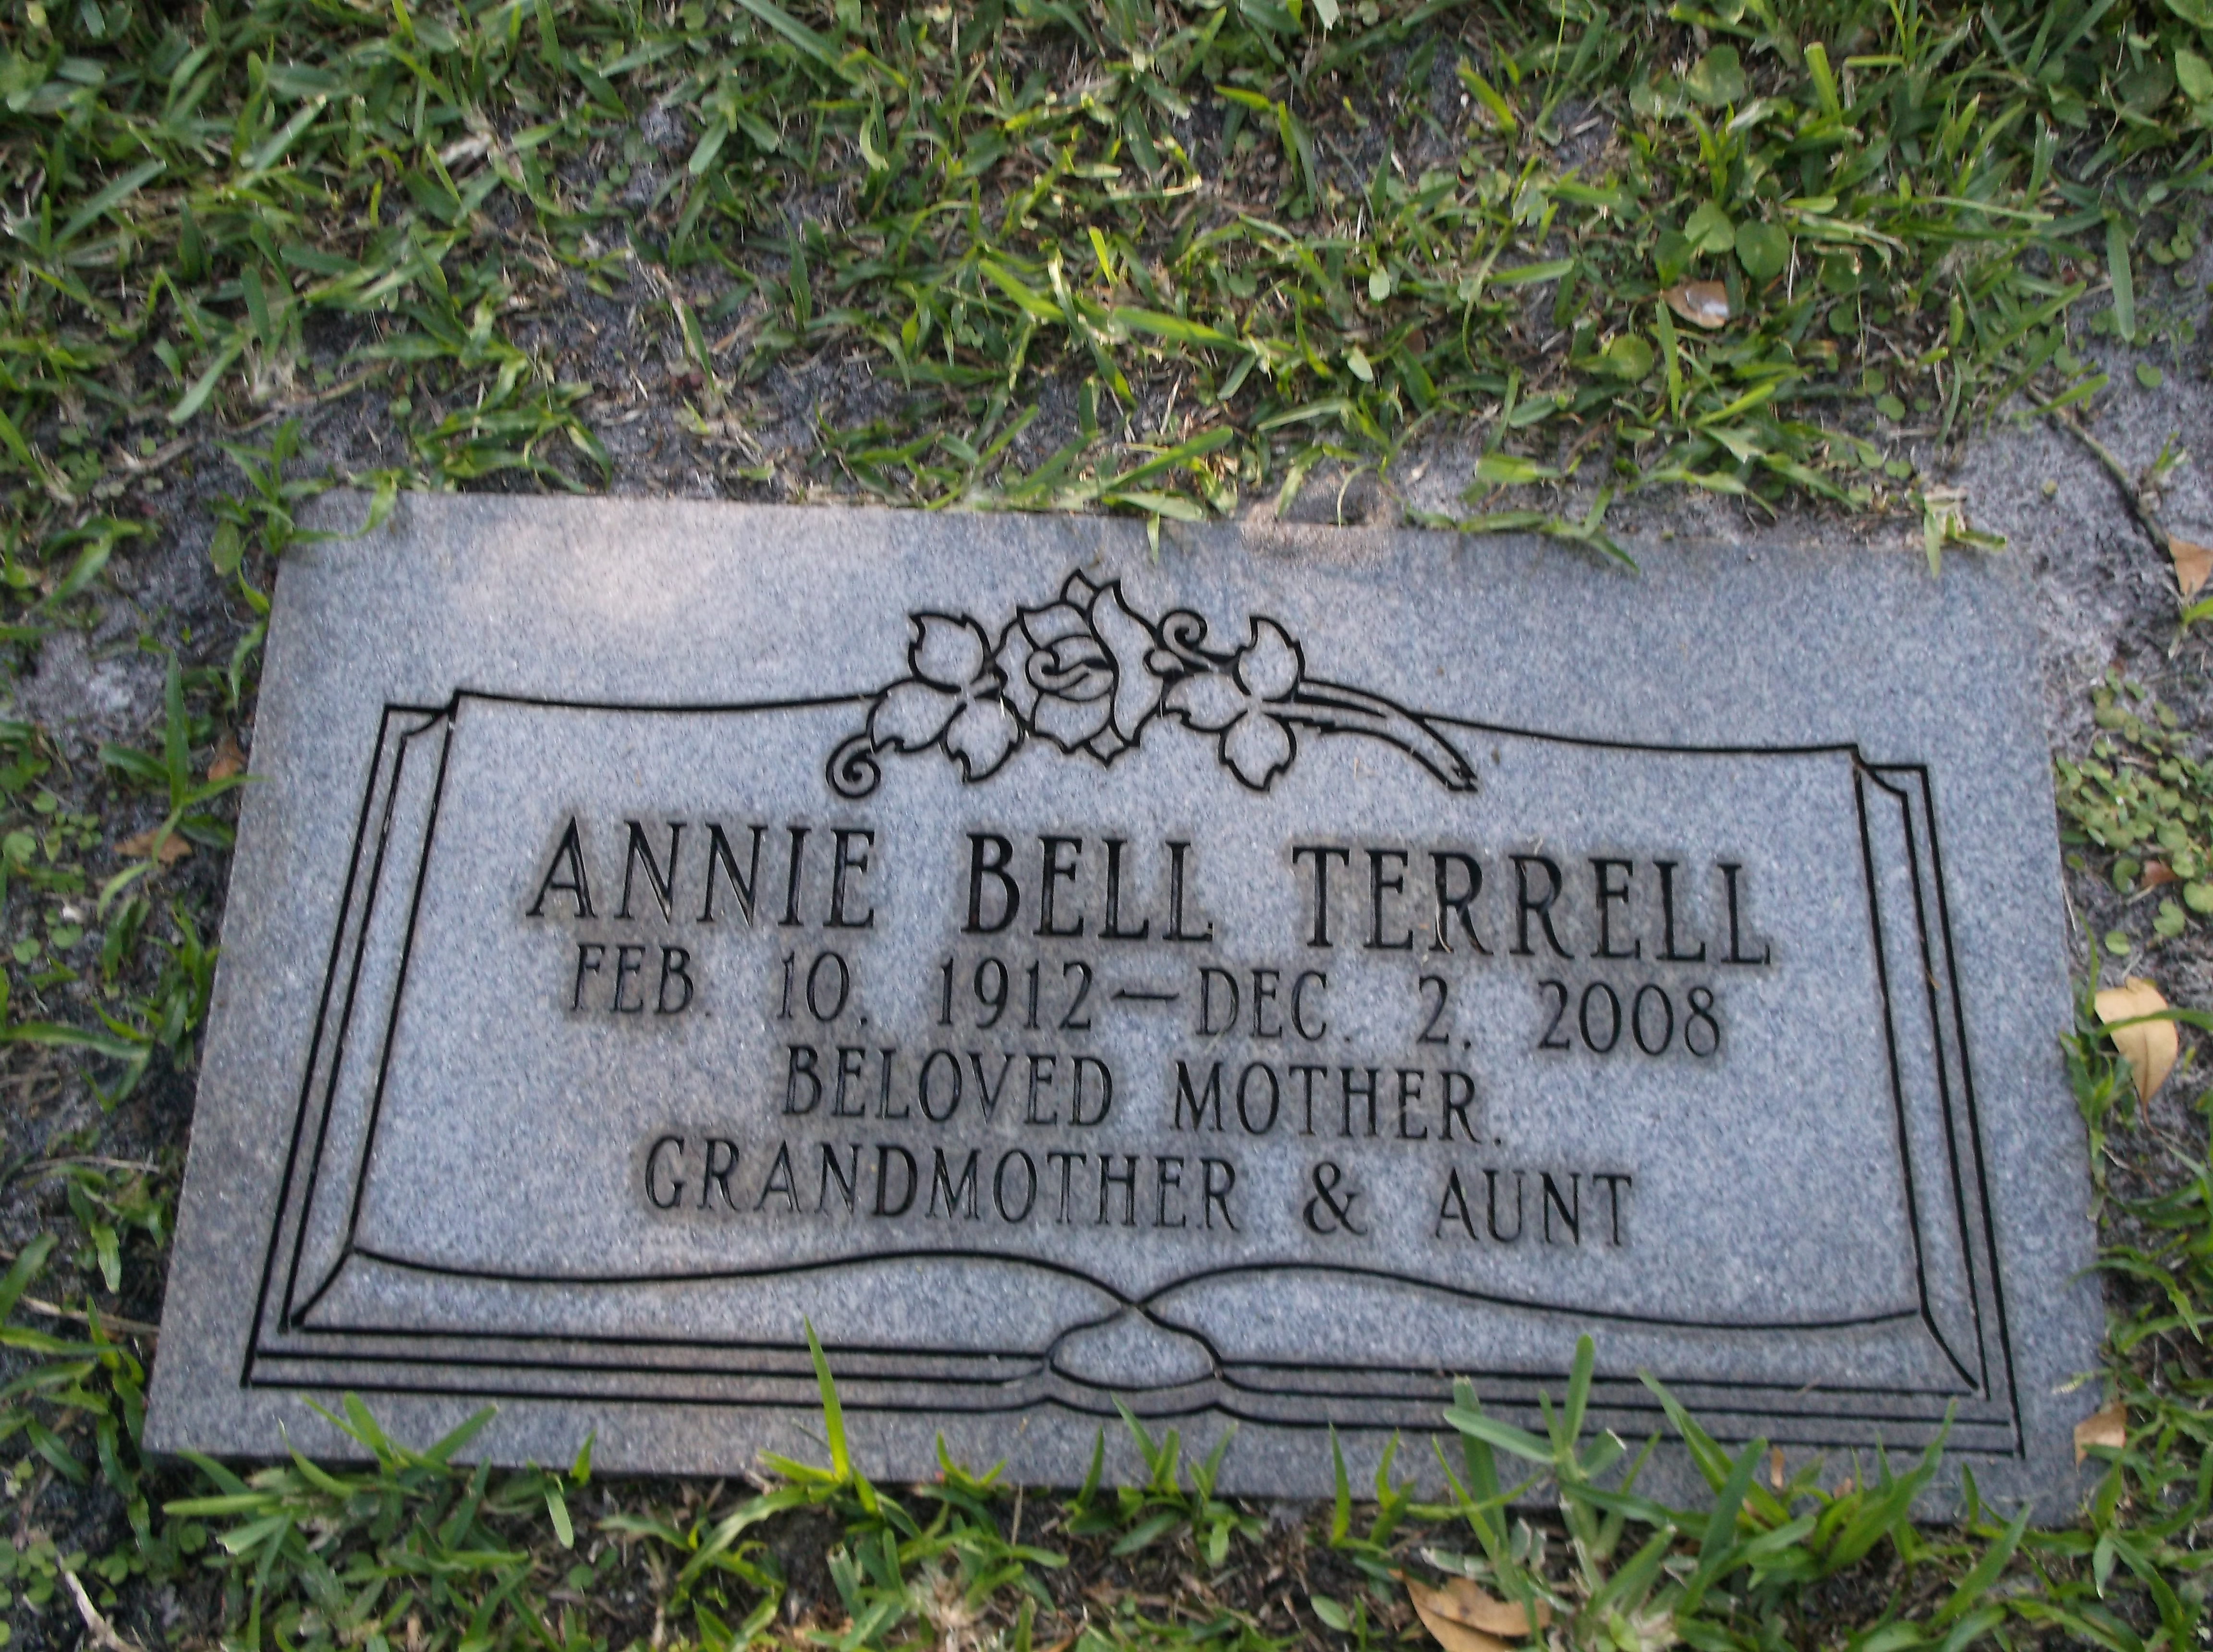 Annie Bell Terrell